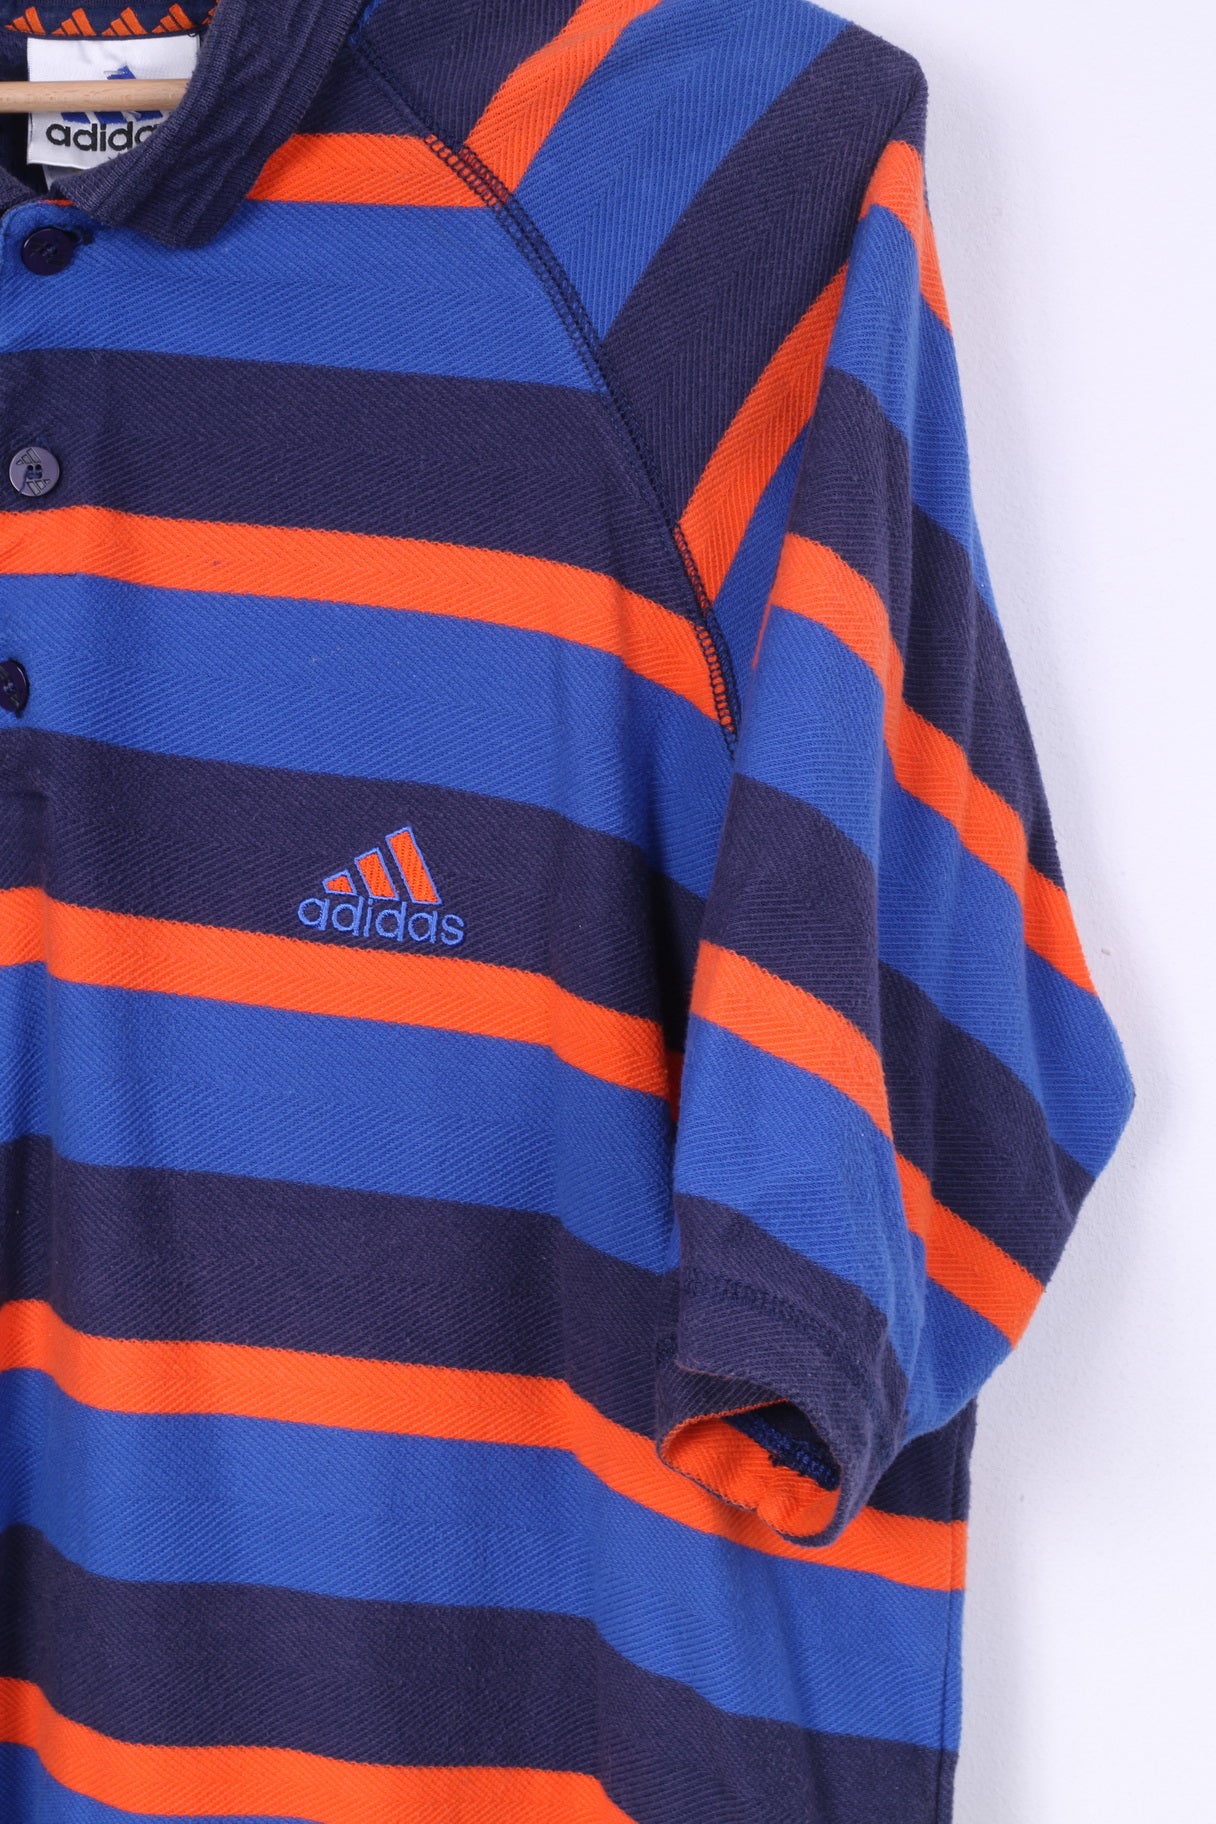 Polo Adidas da uomo L, vintage estivo, in cotone a righe blu navy, a righe